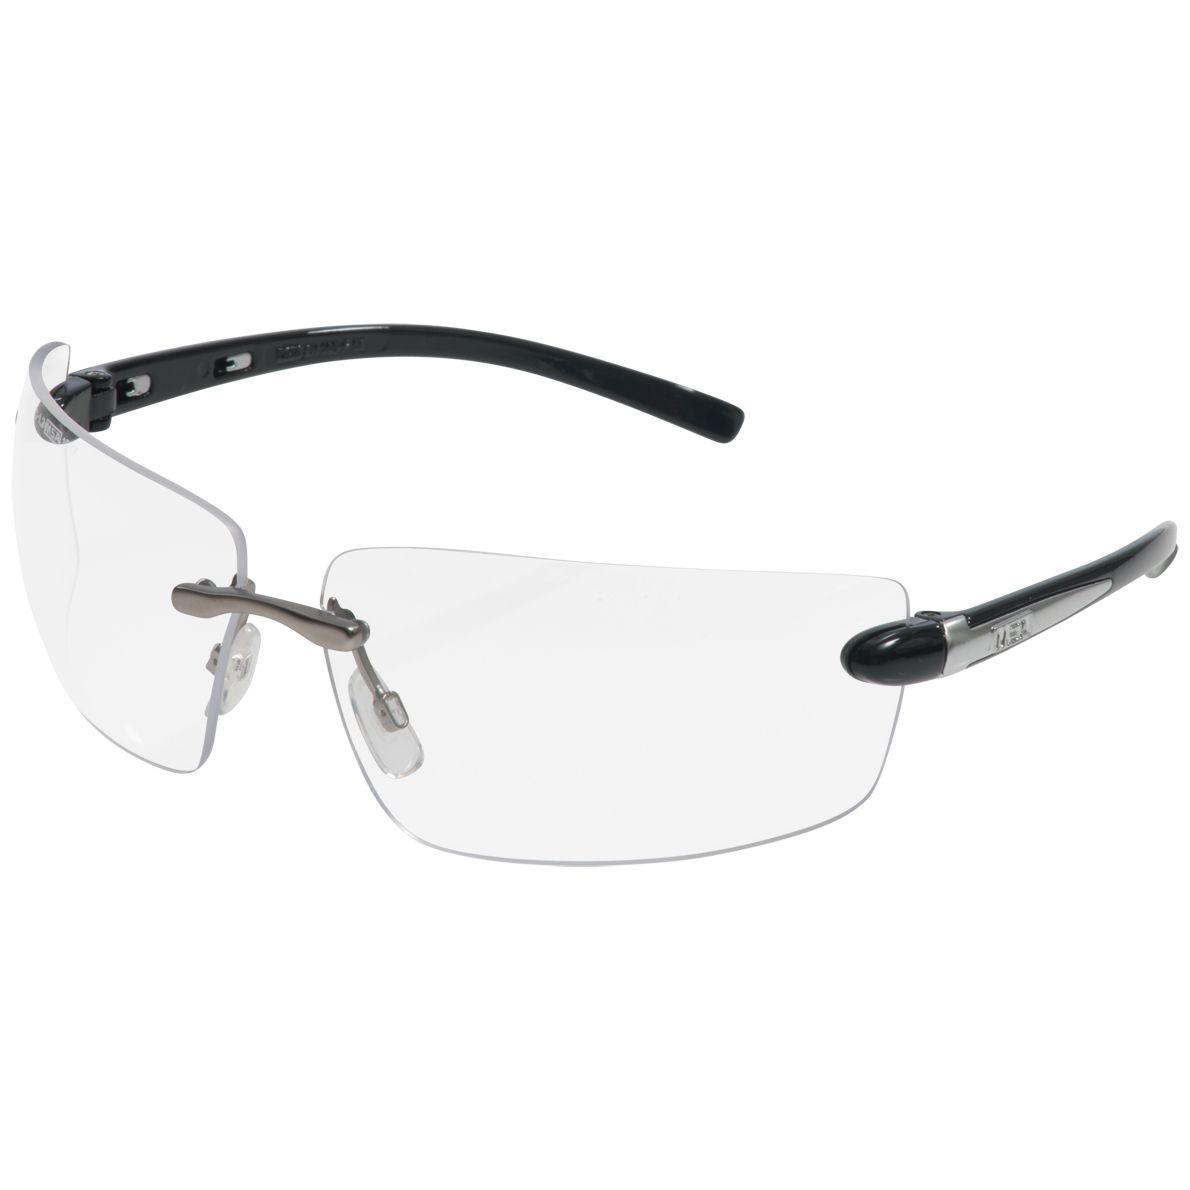 MSA Alaska Schutzbrille - kratz- & beschlagfest dank Sightgard-Beschichtung - EN 166/170 - Schwarz/Klar